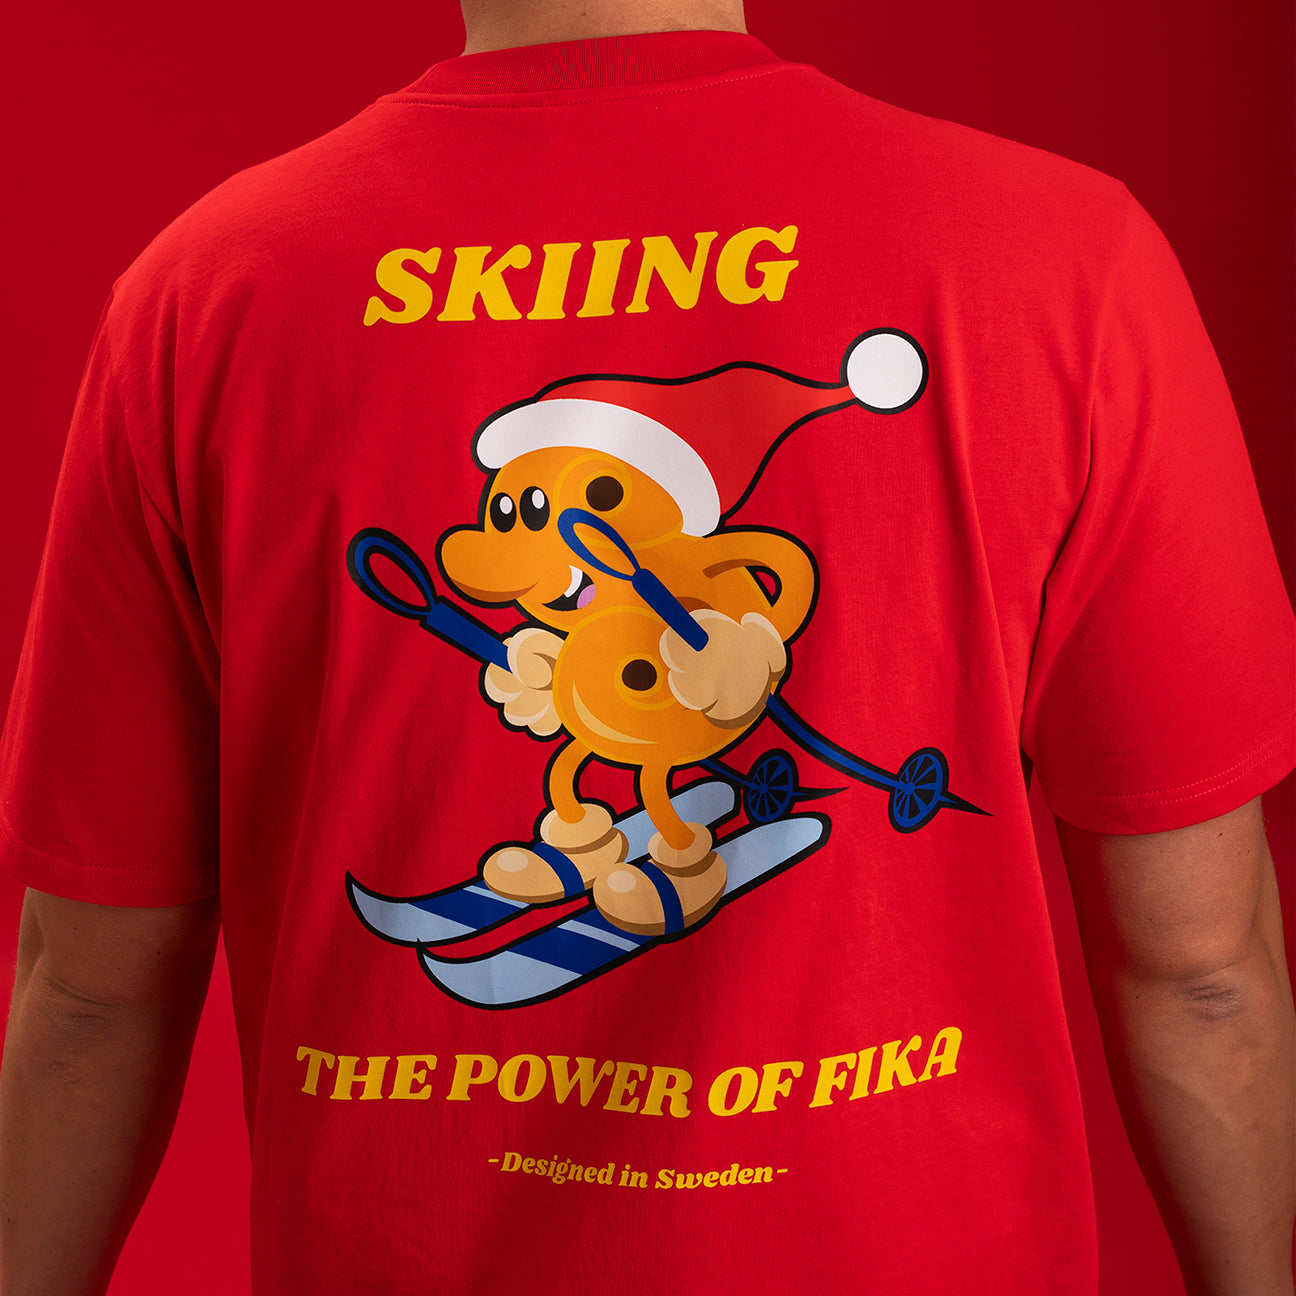 Skiing Lussenbulle - T-shirt